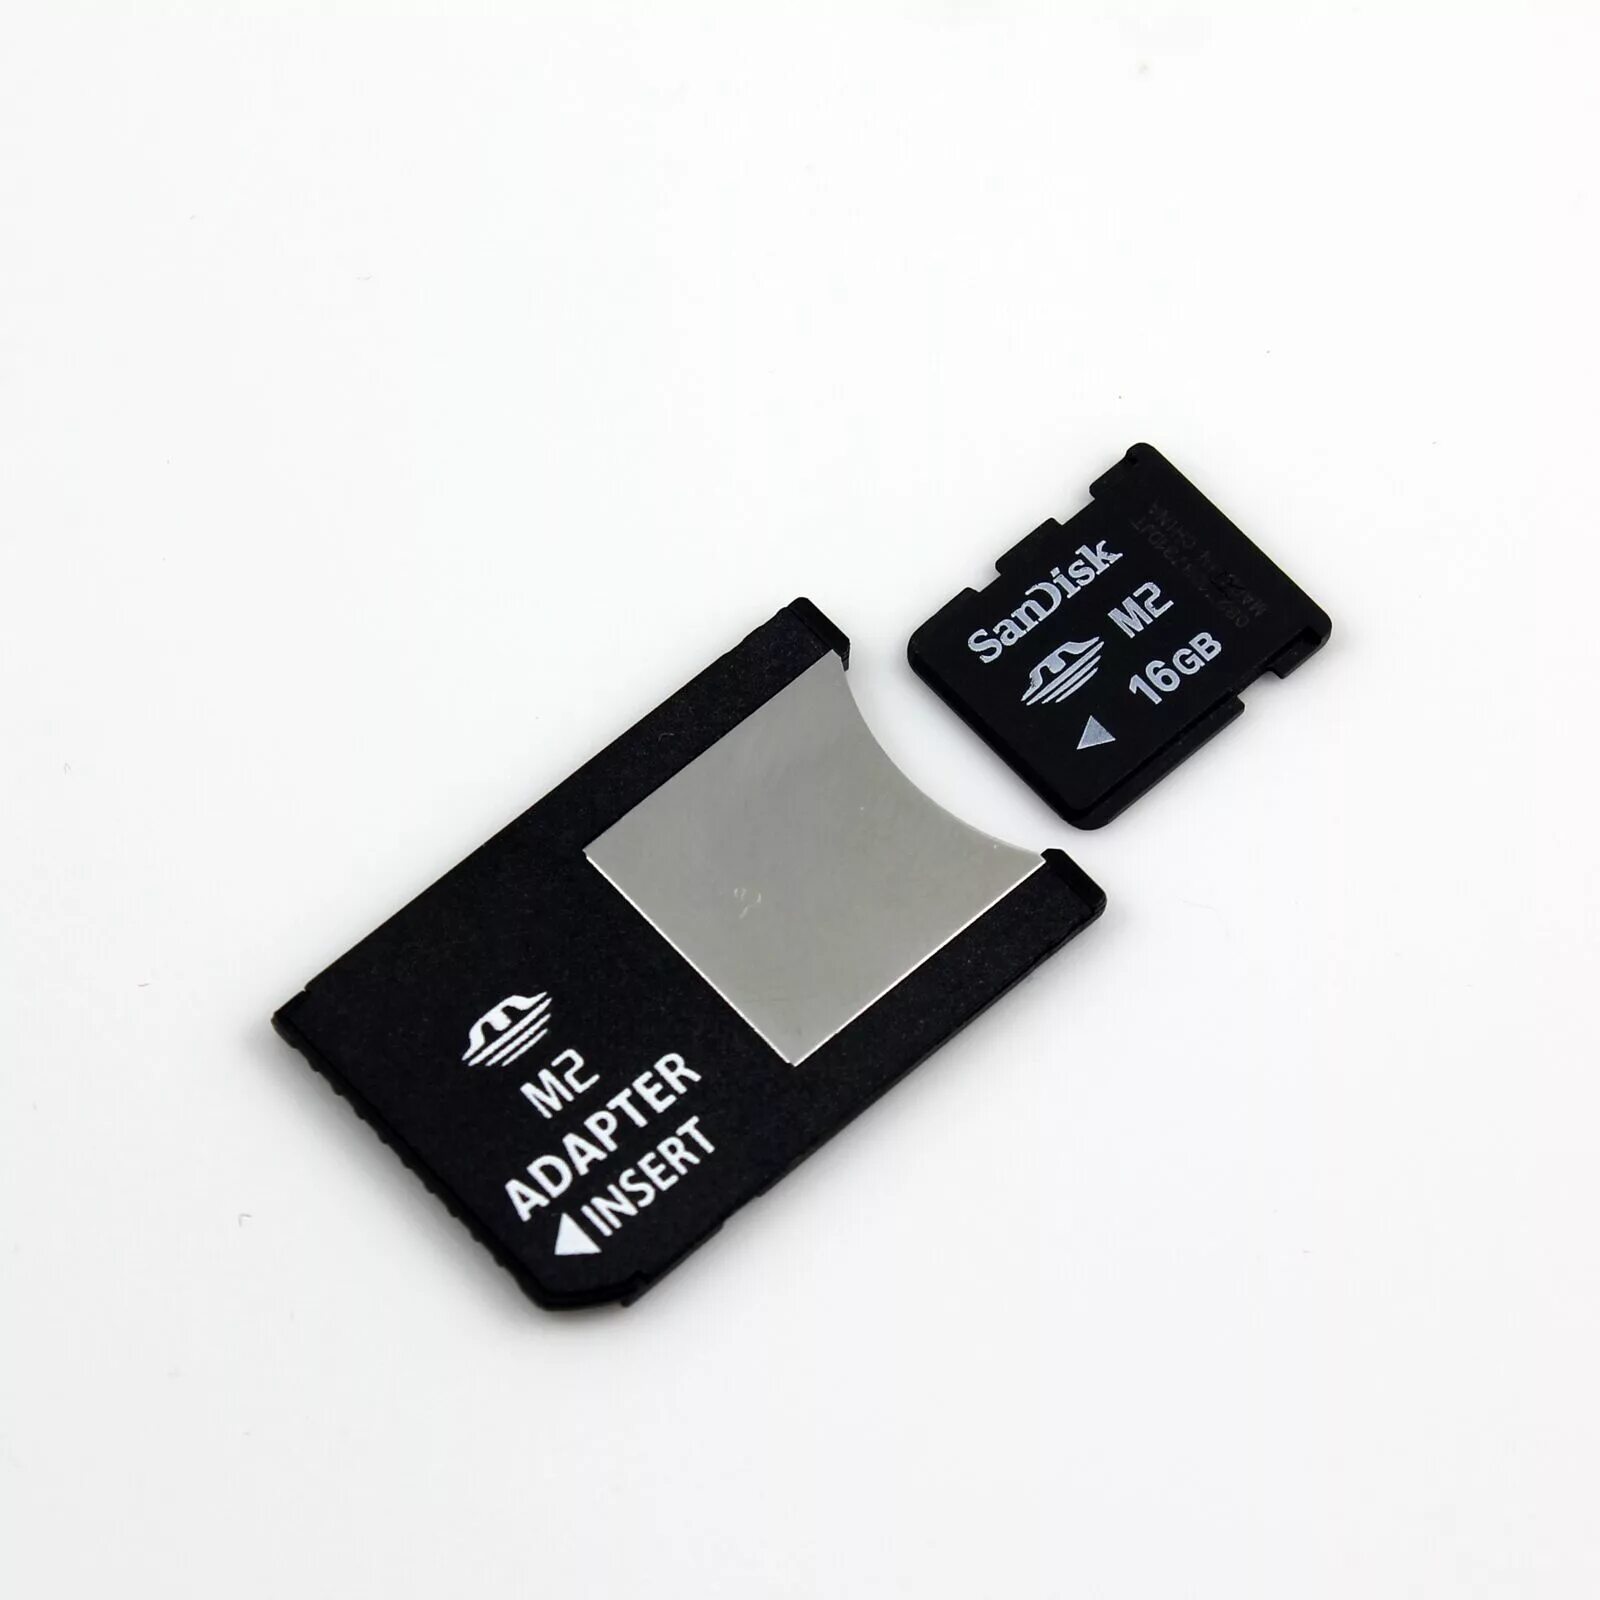 Адаптер для микро SD В m2 Sony. Адаптер карты памяти Sony m2 USB. Переходник на карту памяти MICROSD на Sony m2. M2 Sony флешка. Купить m2 адаптер